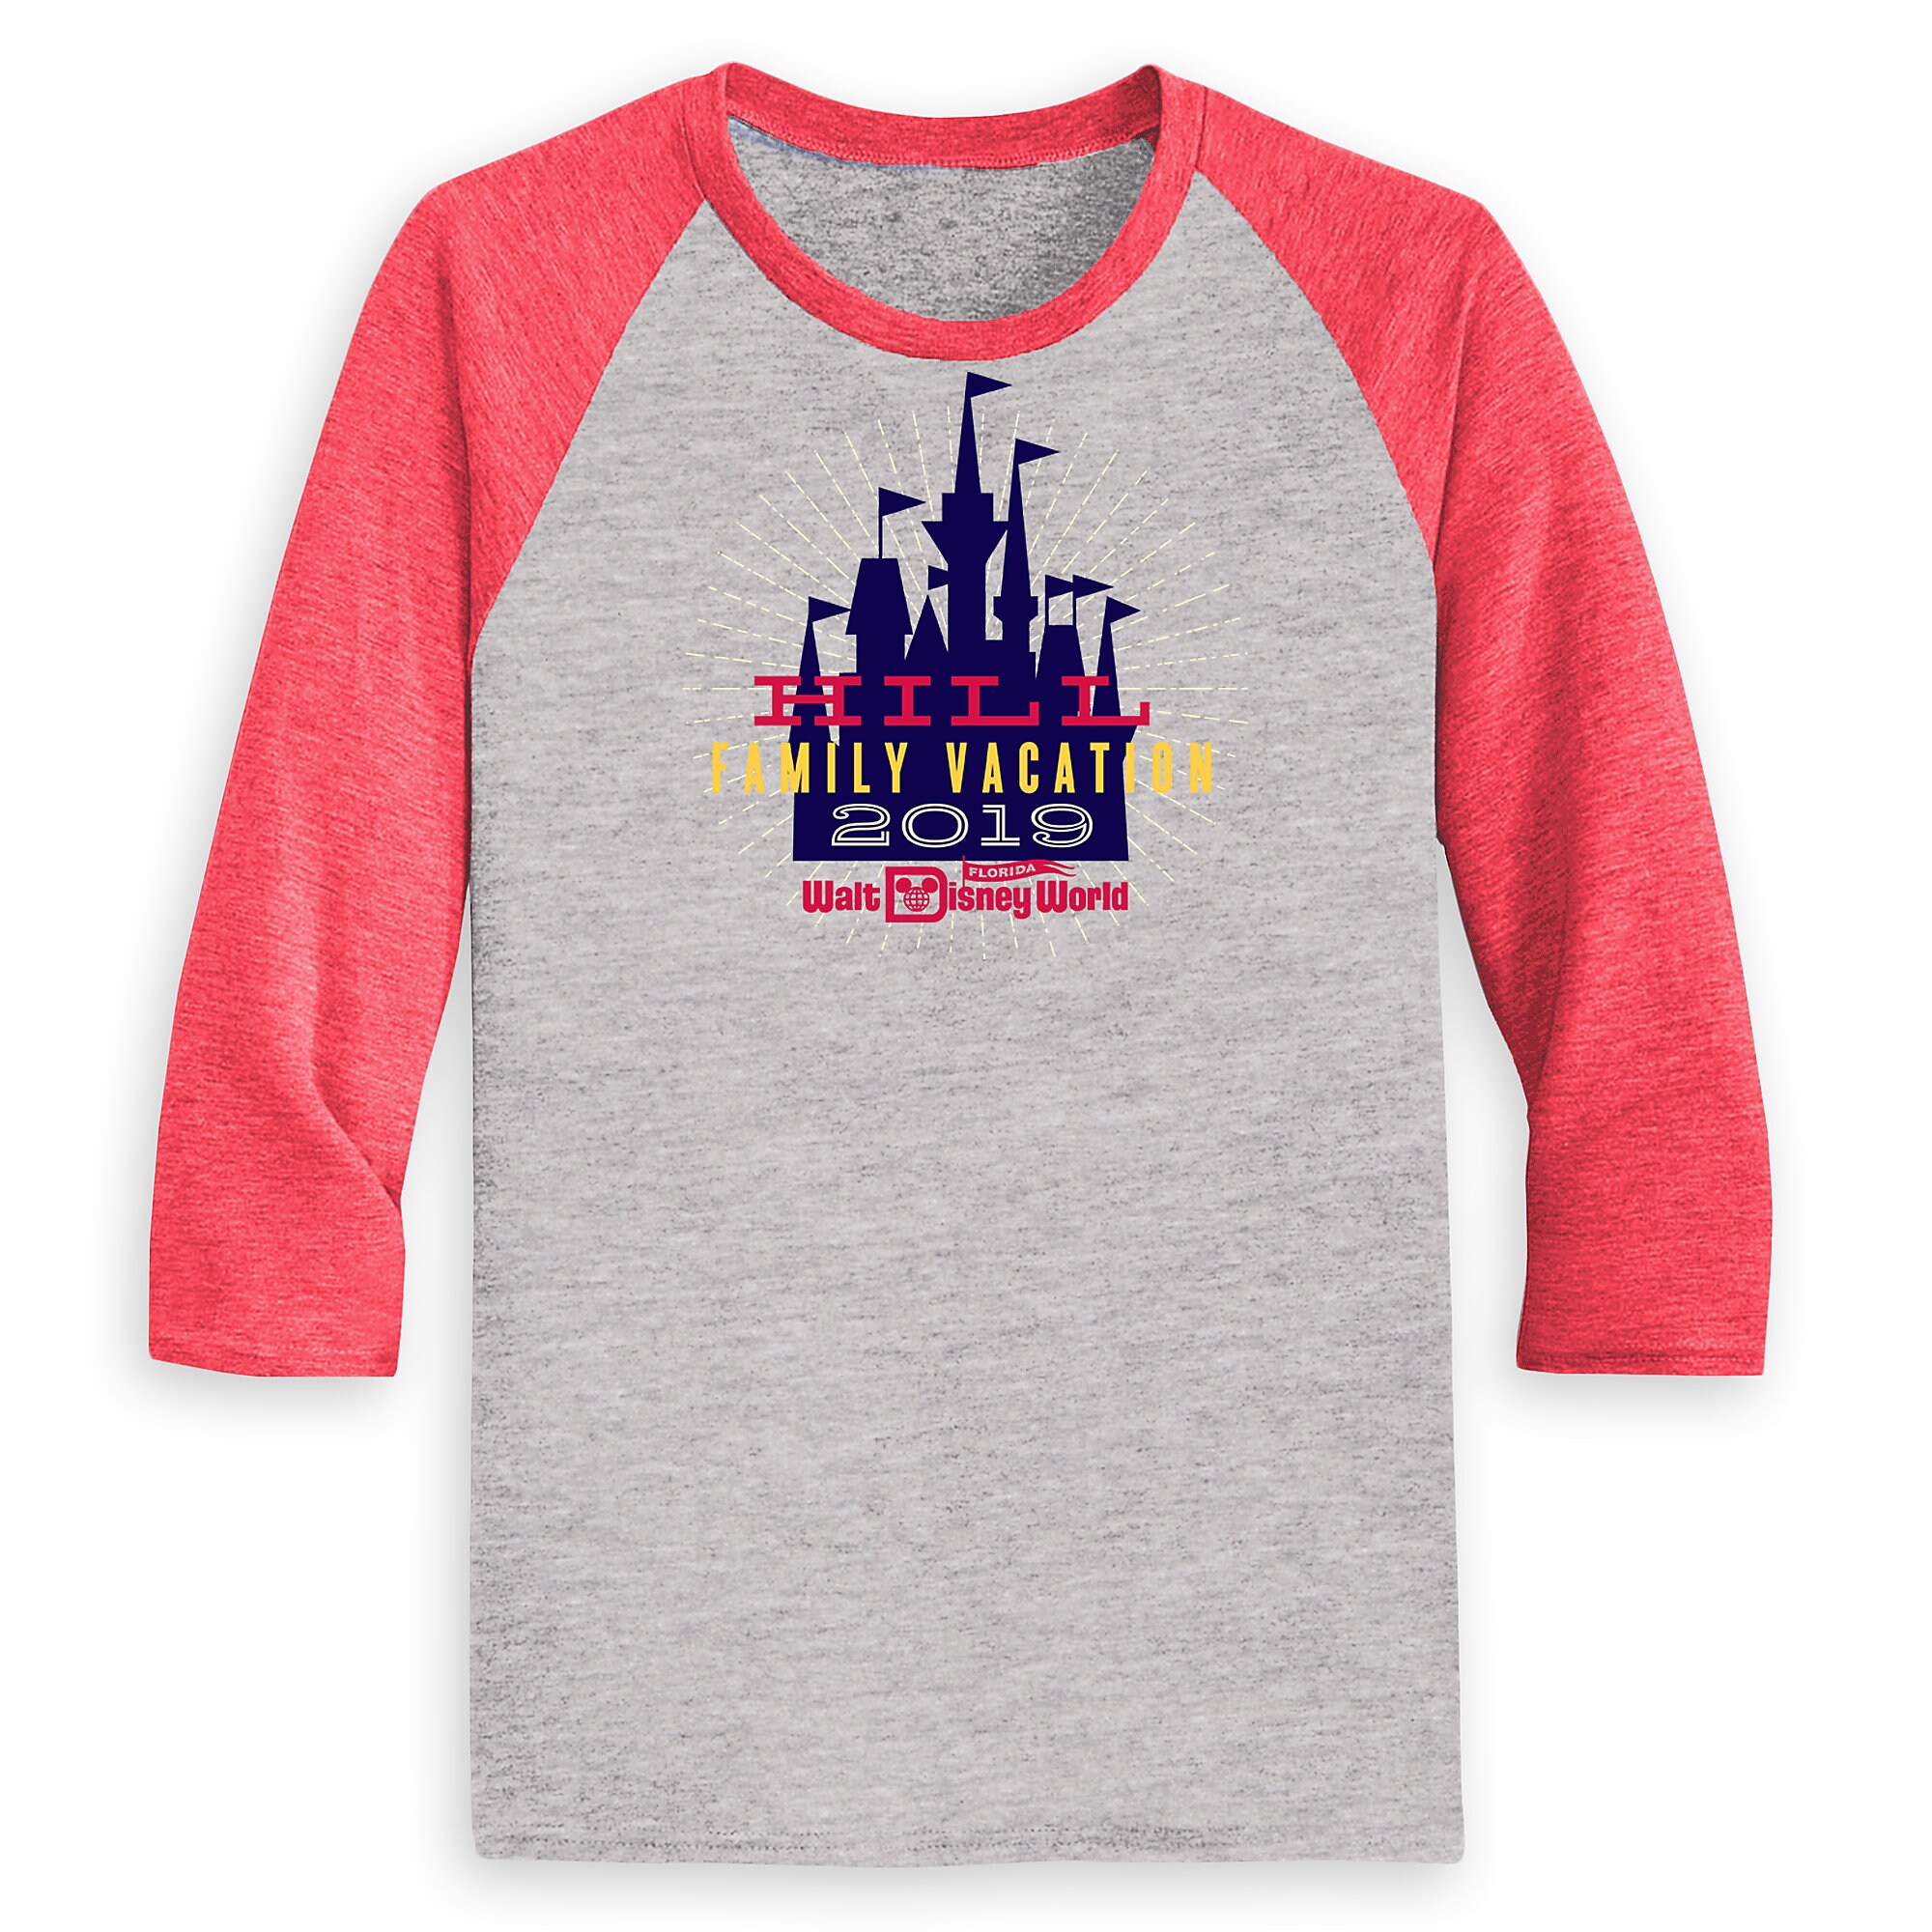 Men's Cinderella Castle Family Vacation Raglan Shirt - Walt Disney World - 2019 - Customized